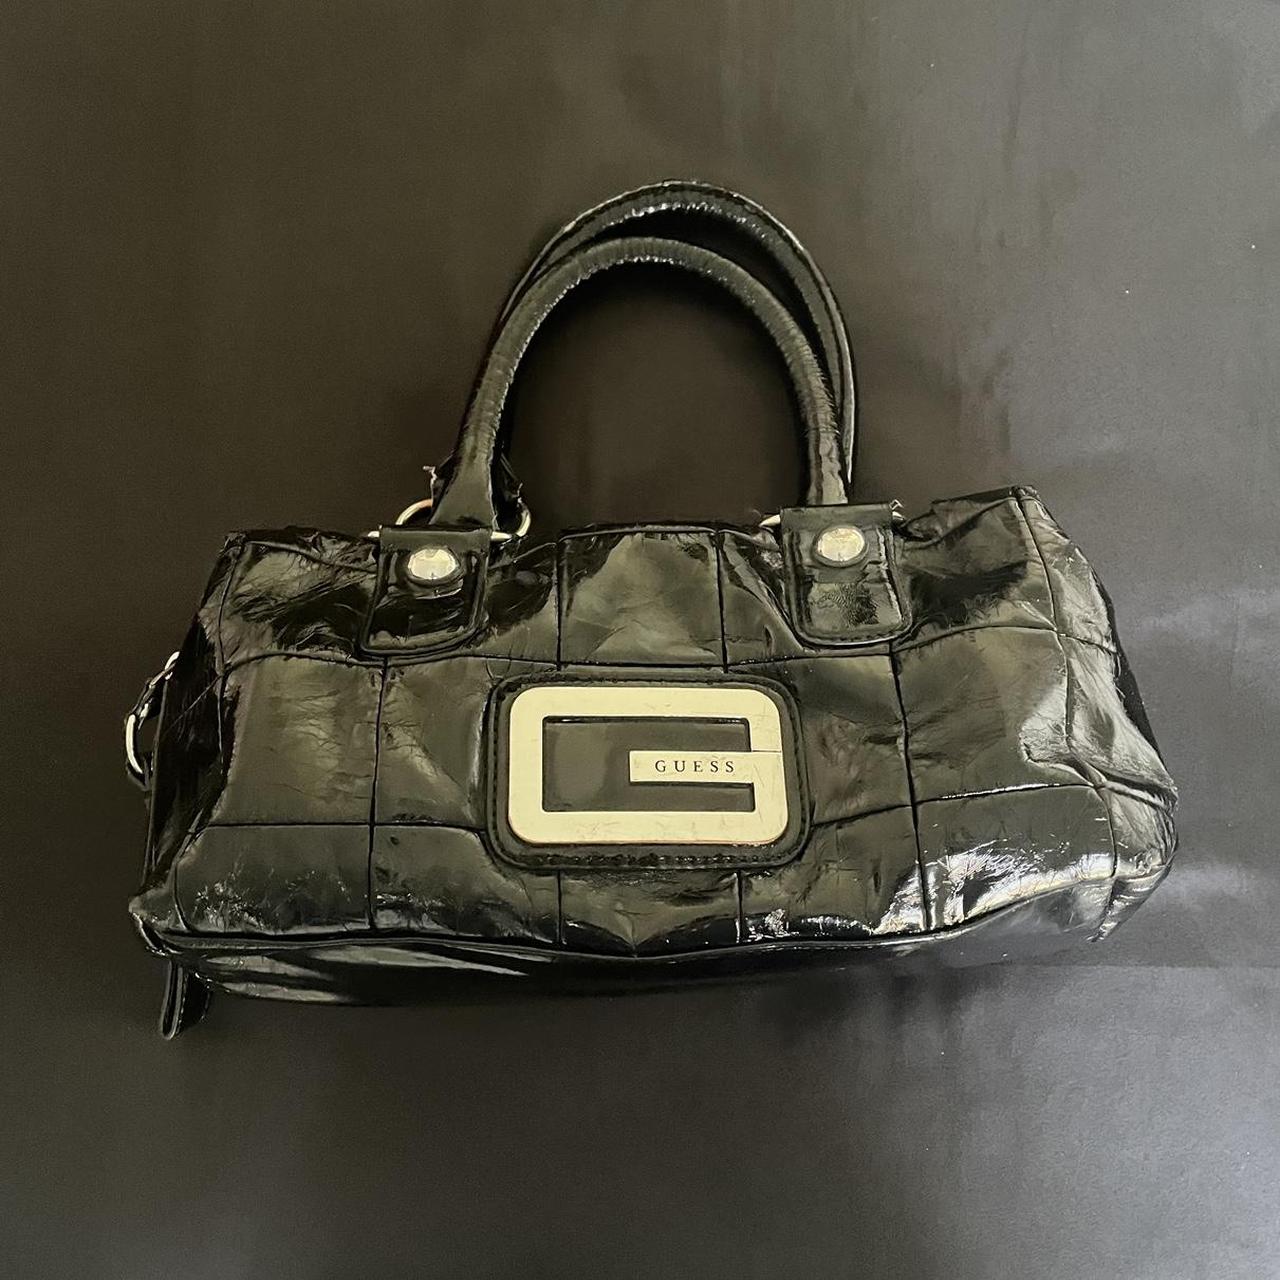 SS23 Gilda Tonelli - Como Handbag | Italian leather bags since 1921